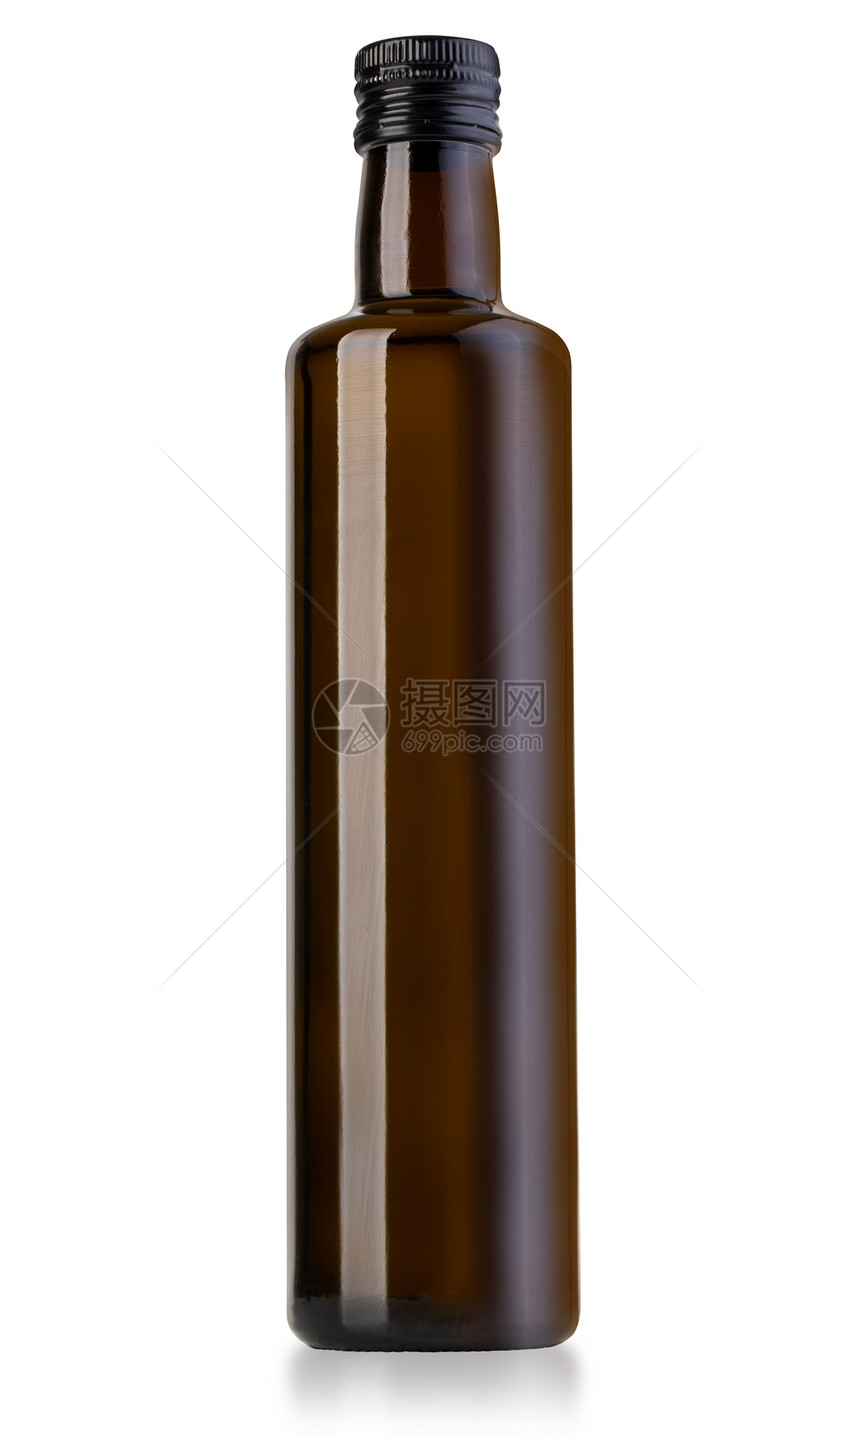 Bottiglialoliodiolivaextolivaextvergine外生橄榄油瓶配有剪切路径图片